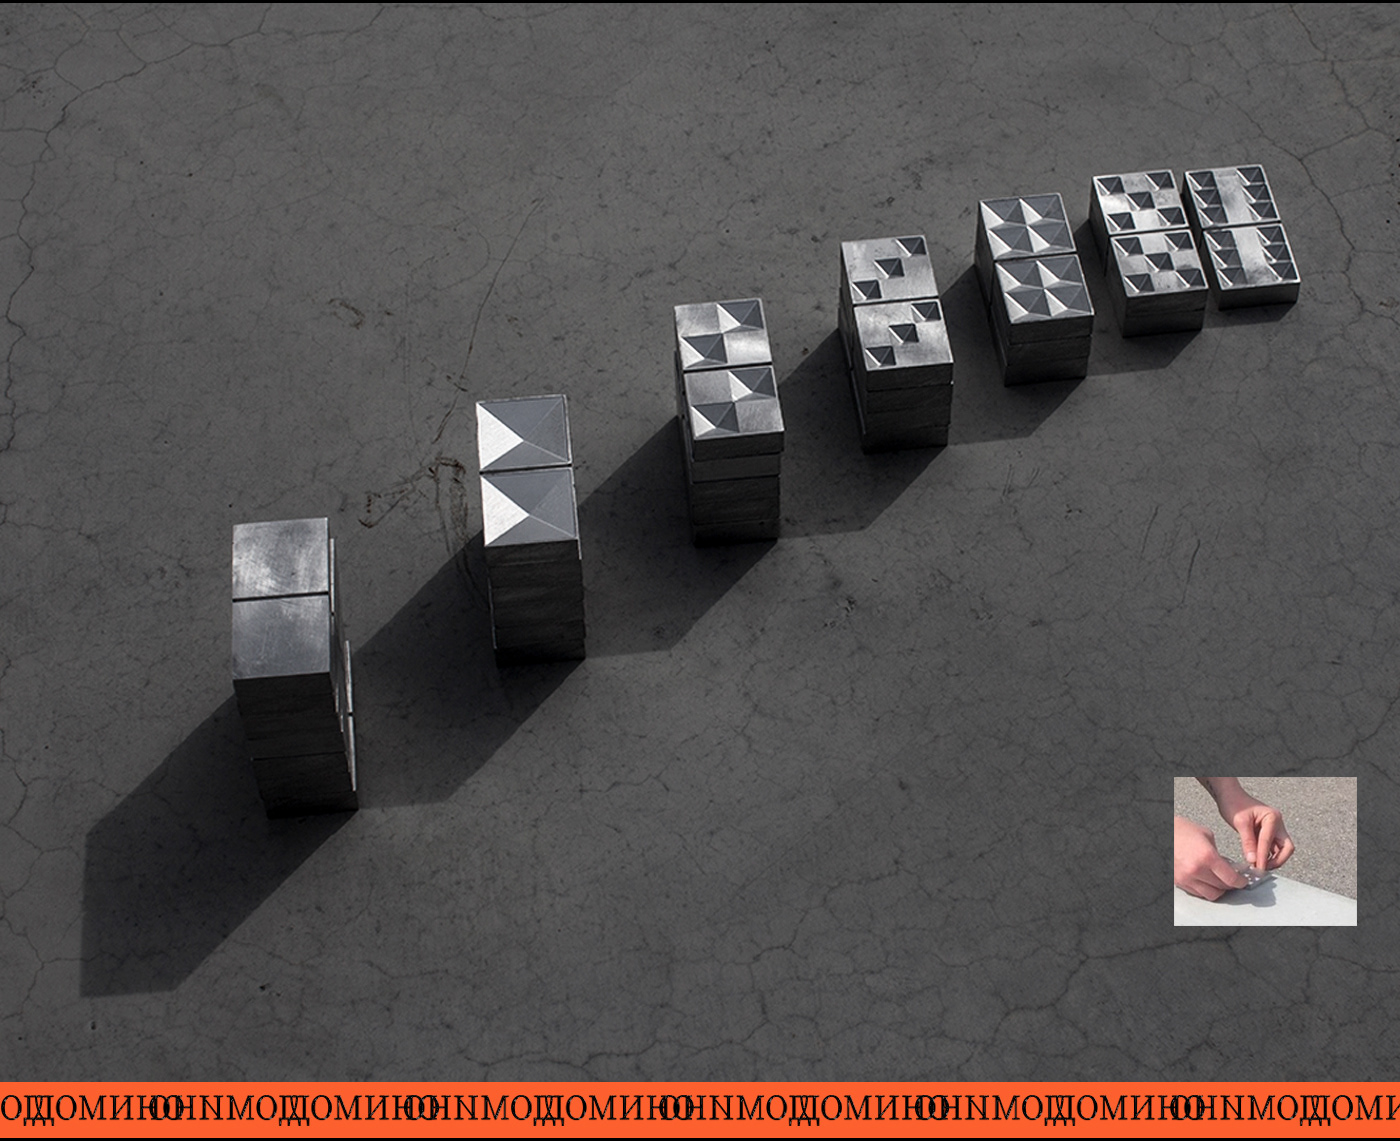 dominoes domino product metal minimal productdesign industrialdesign